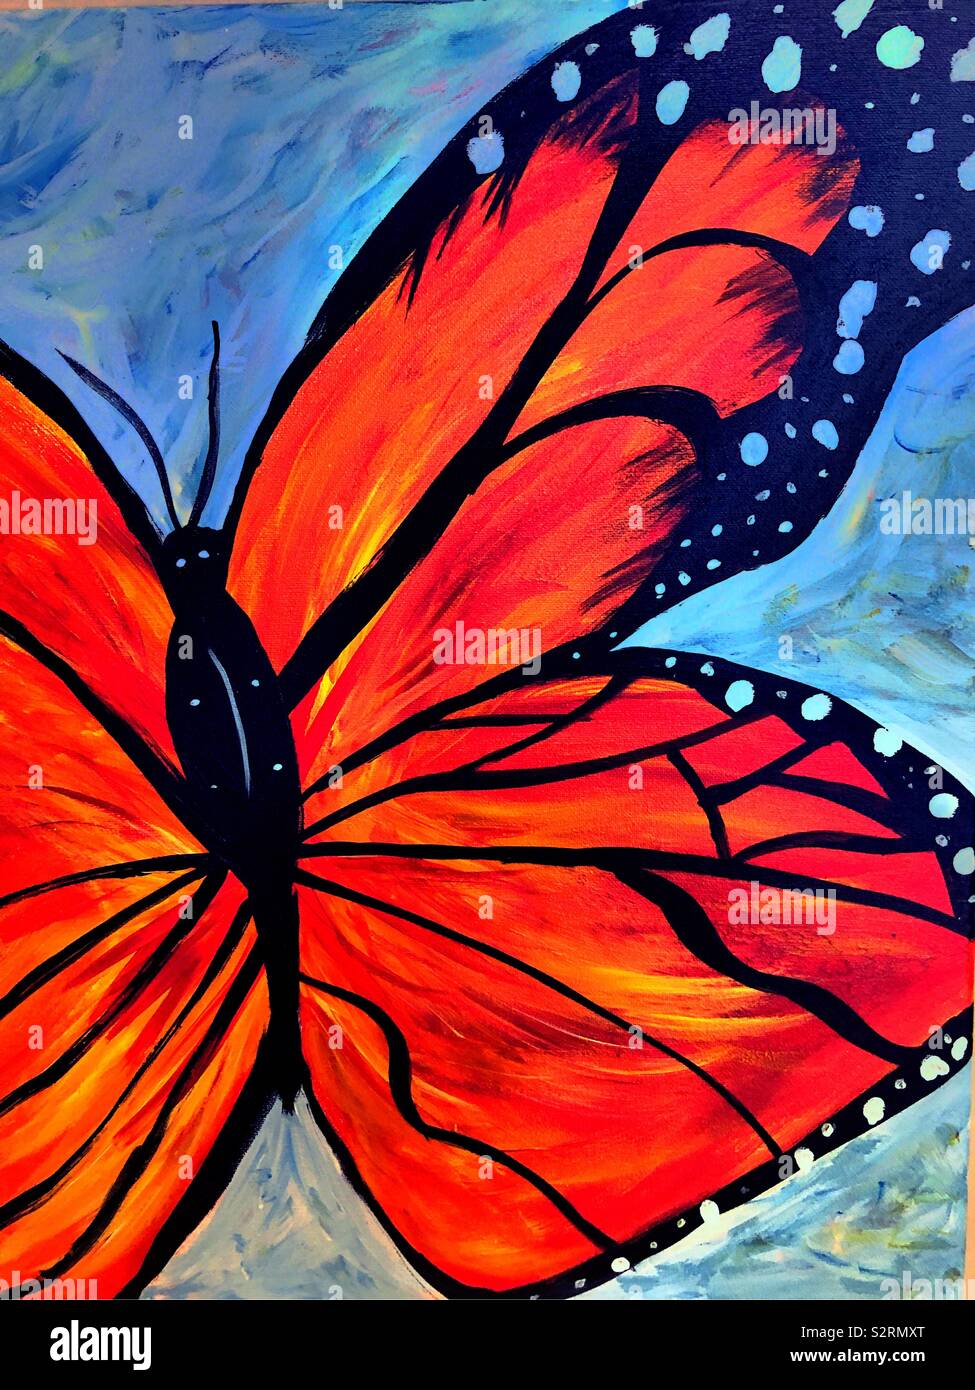 Monarch Butterfly illustration Stock Photo